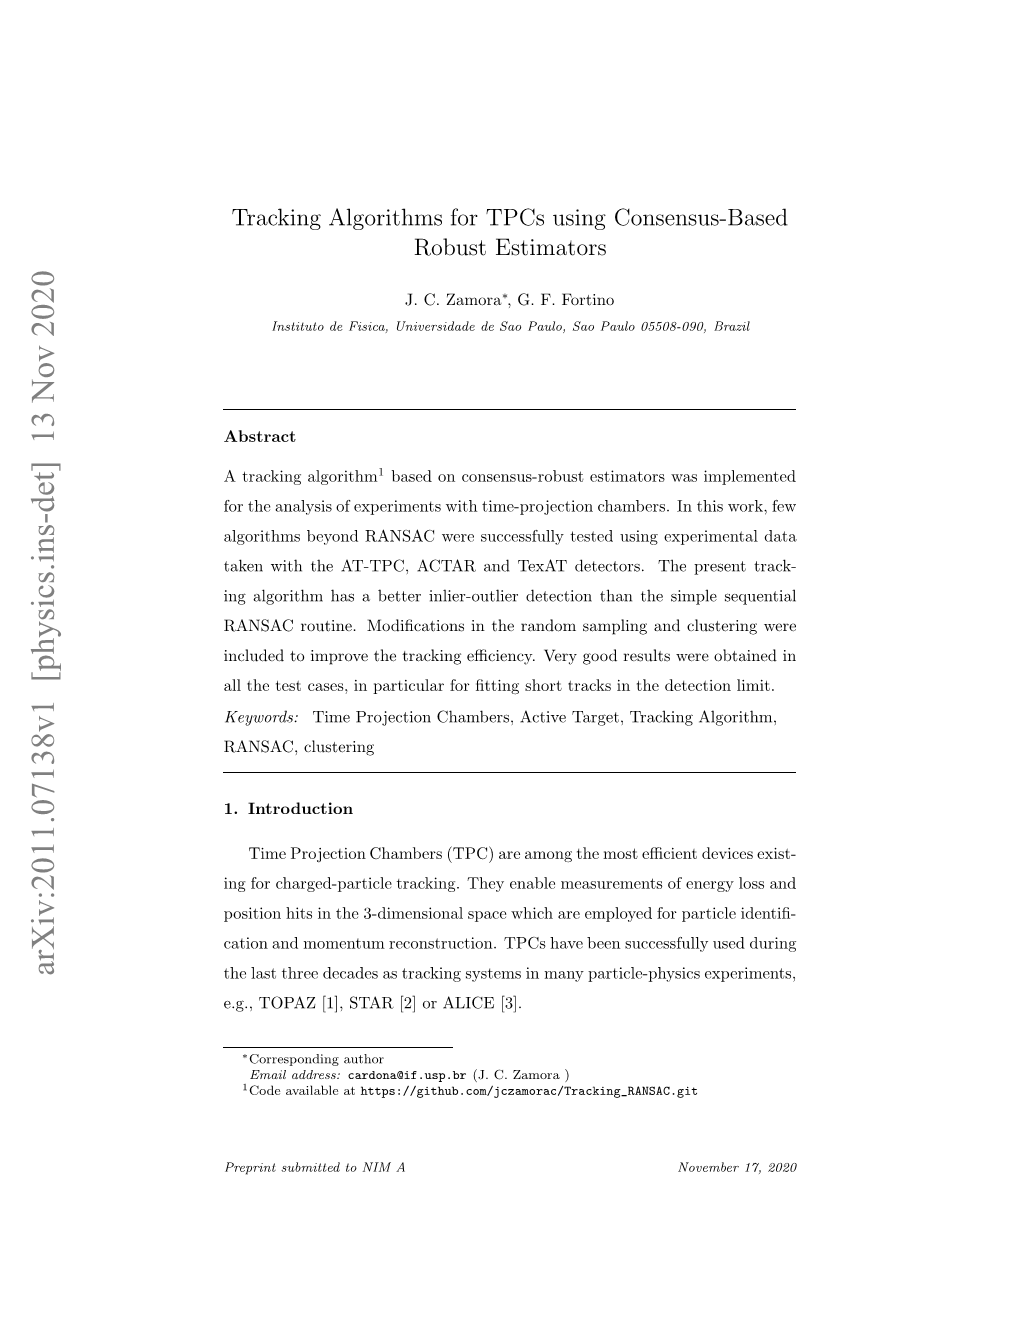 Tracking Algorithms for Tpcs Using Consensus-Based Robust Estimators